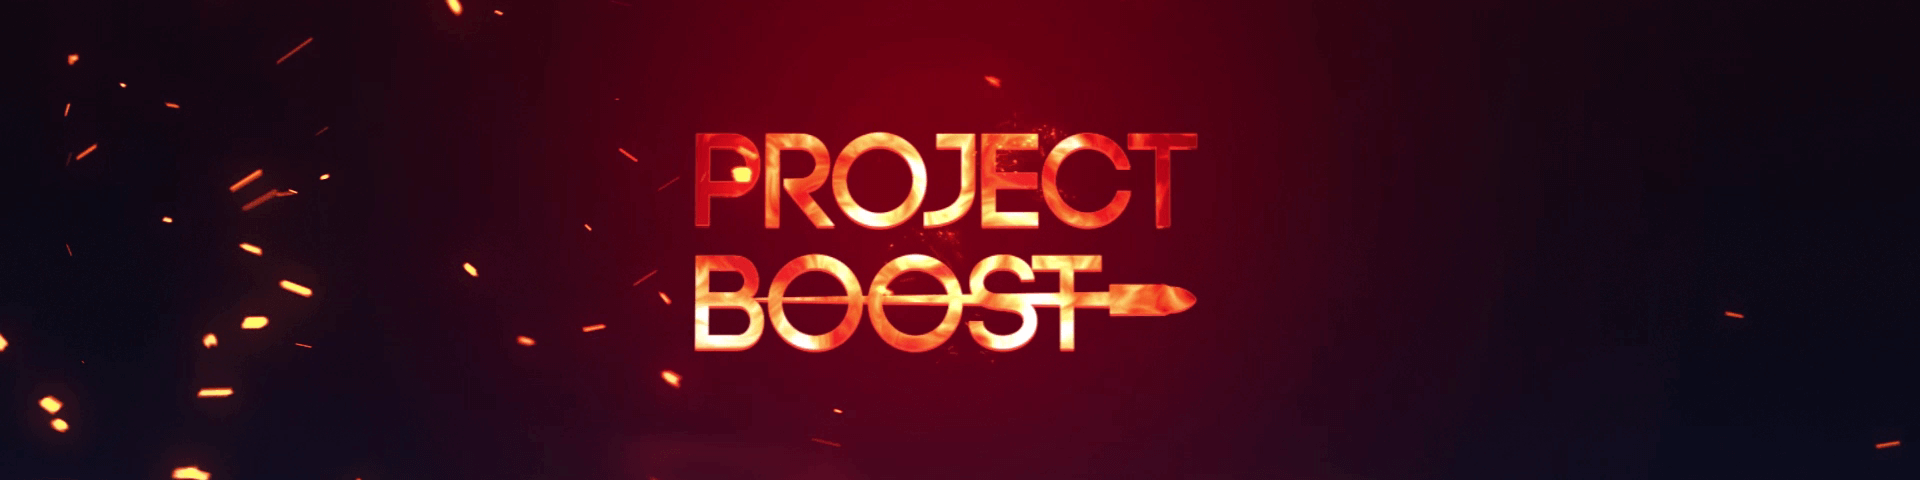 Project Boost - Demo